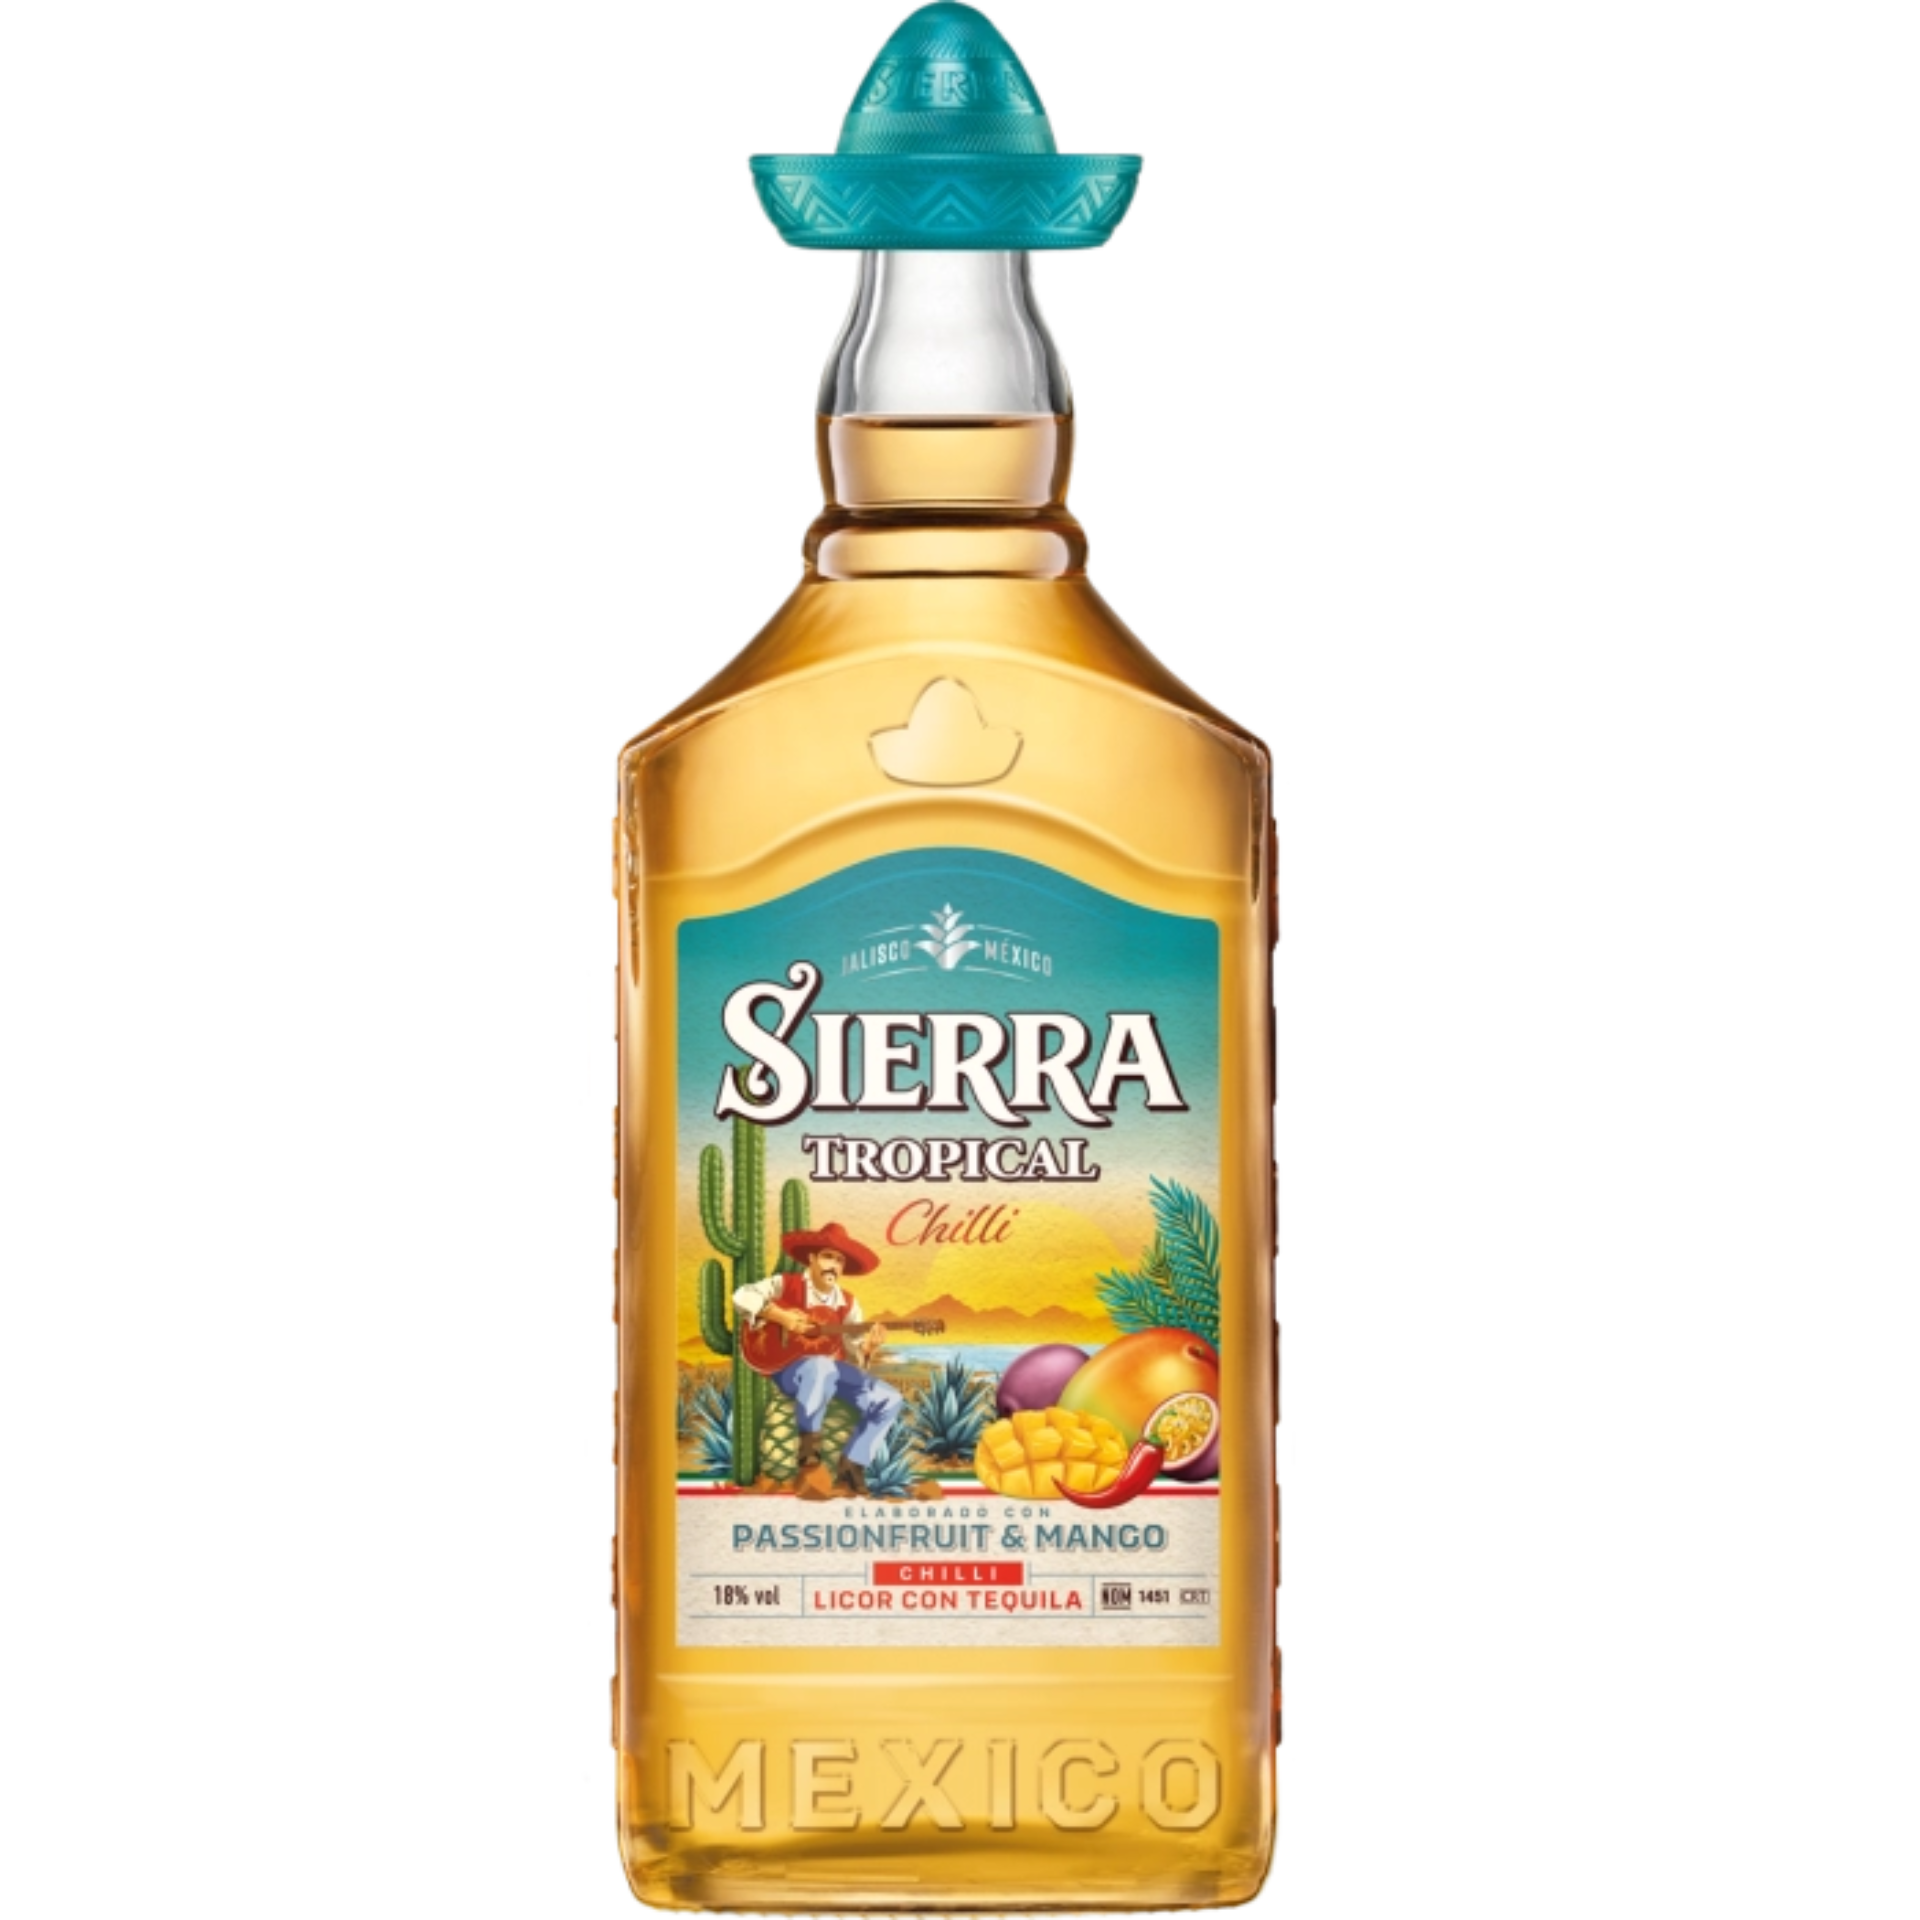 Sierra Tequila Tropical Chilli 18% 0,7l